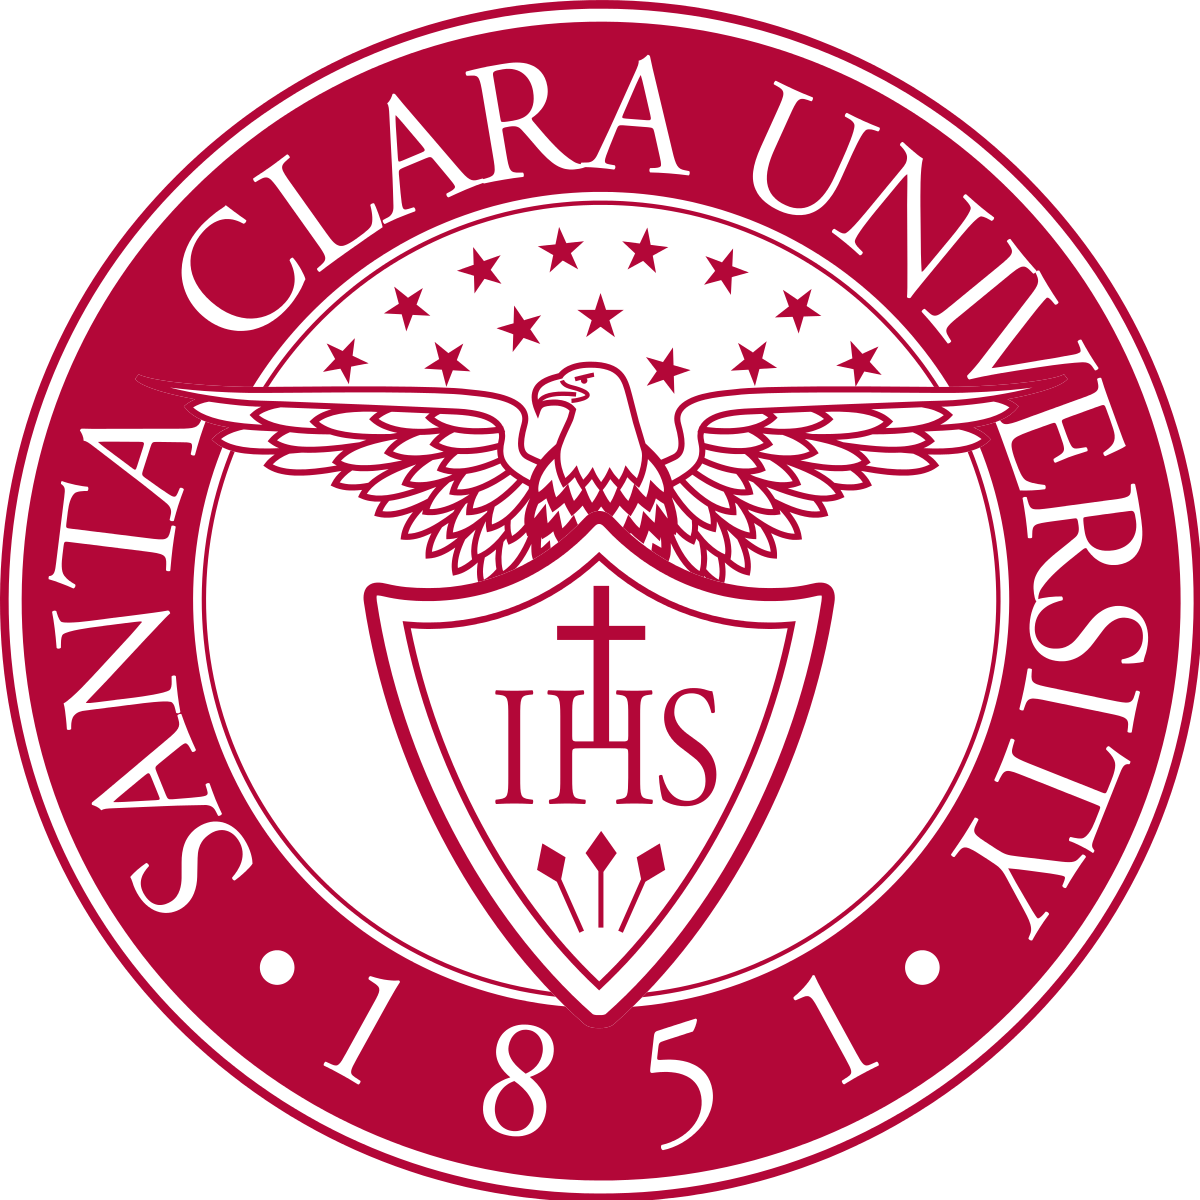 And U of U Mascot Logo - Santa Clara University